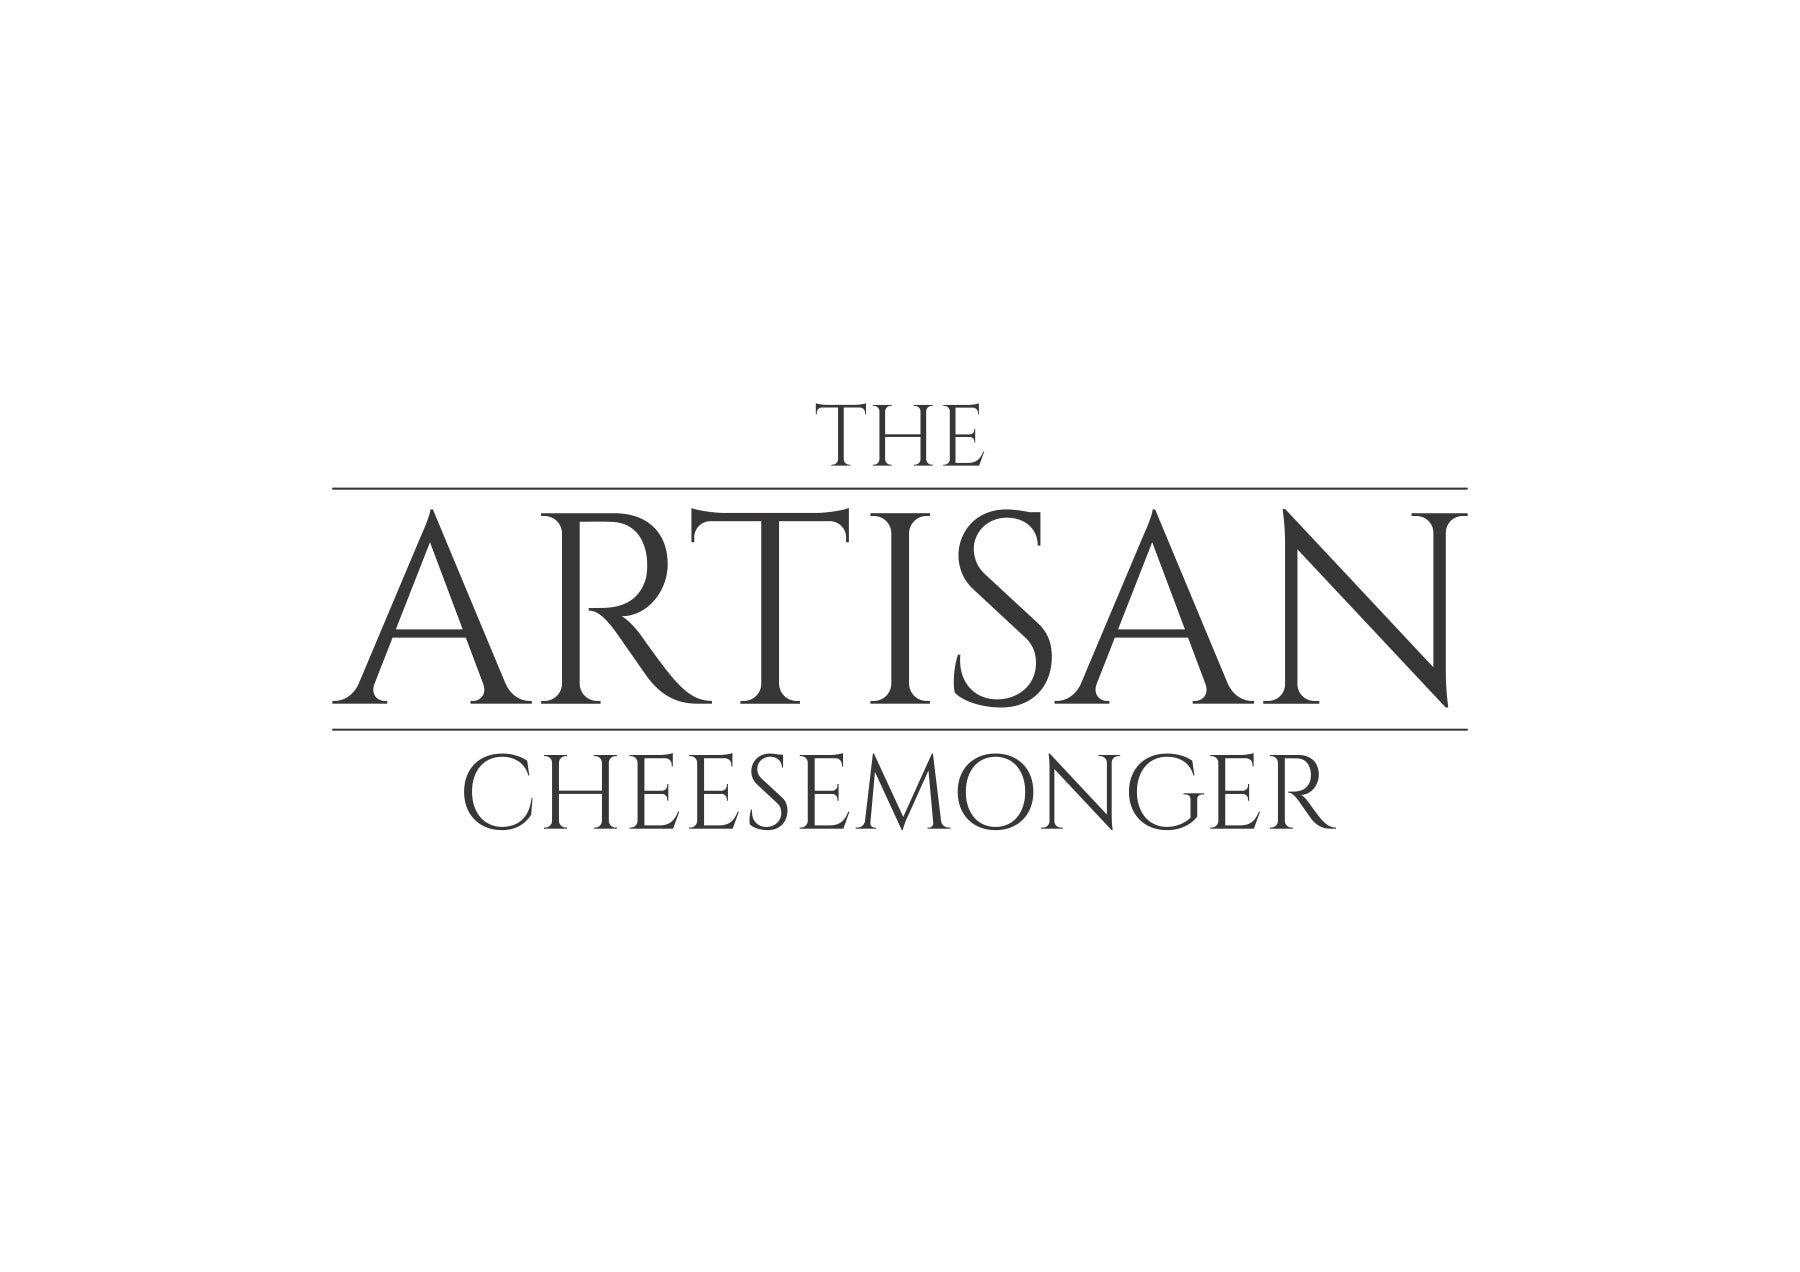 The Artisan Cheesemonger Limited